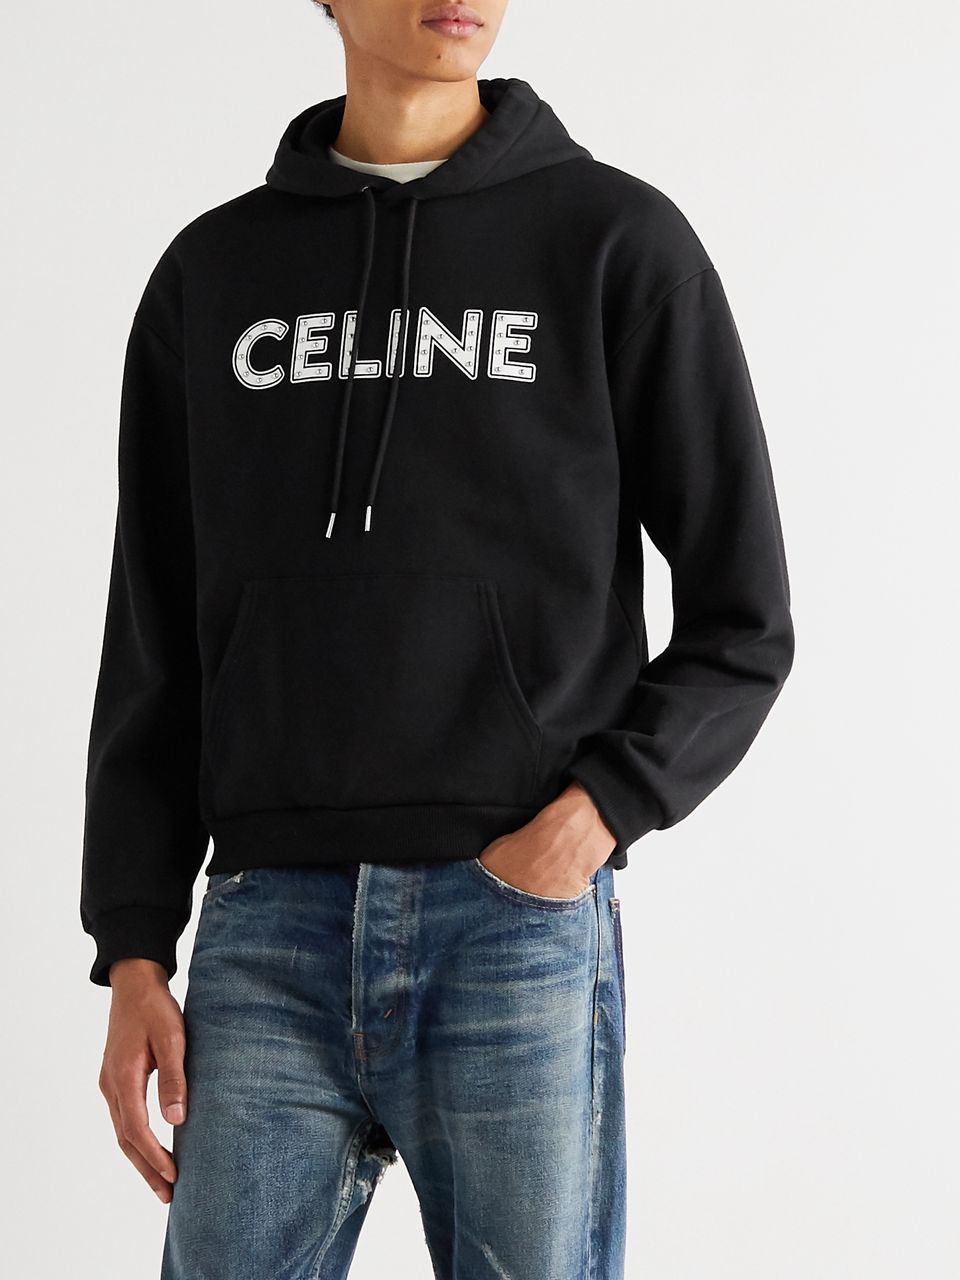 Black Celine-Printed Studded Cotton Hooded Sweatshirt | CELINE HOMME